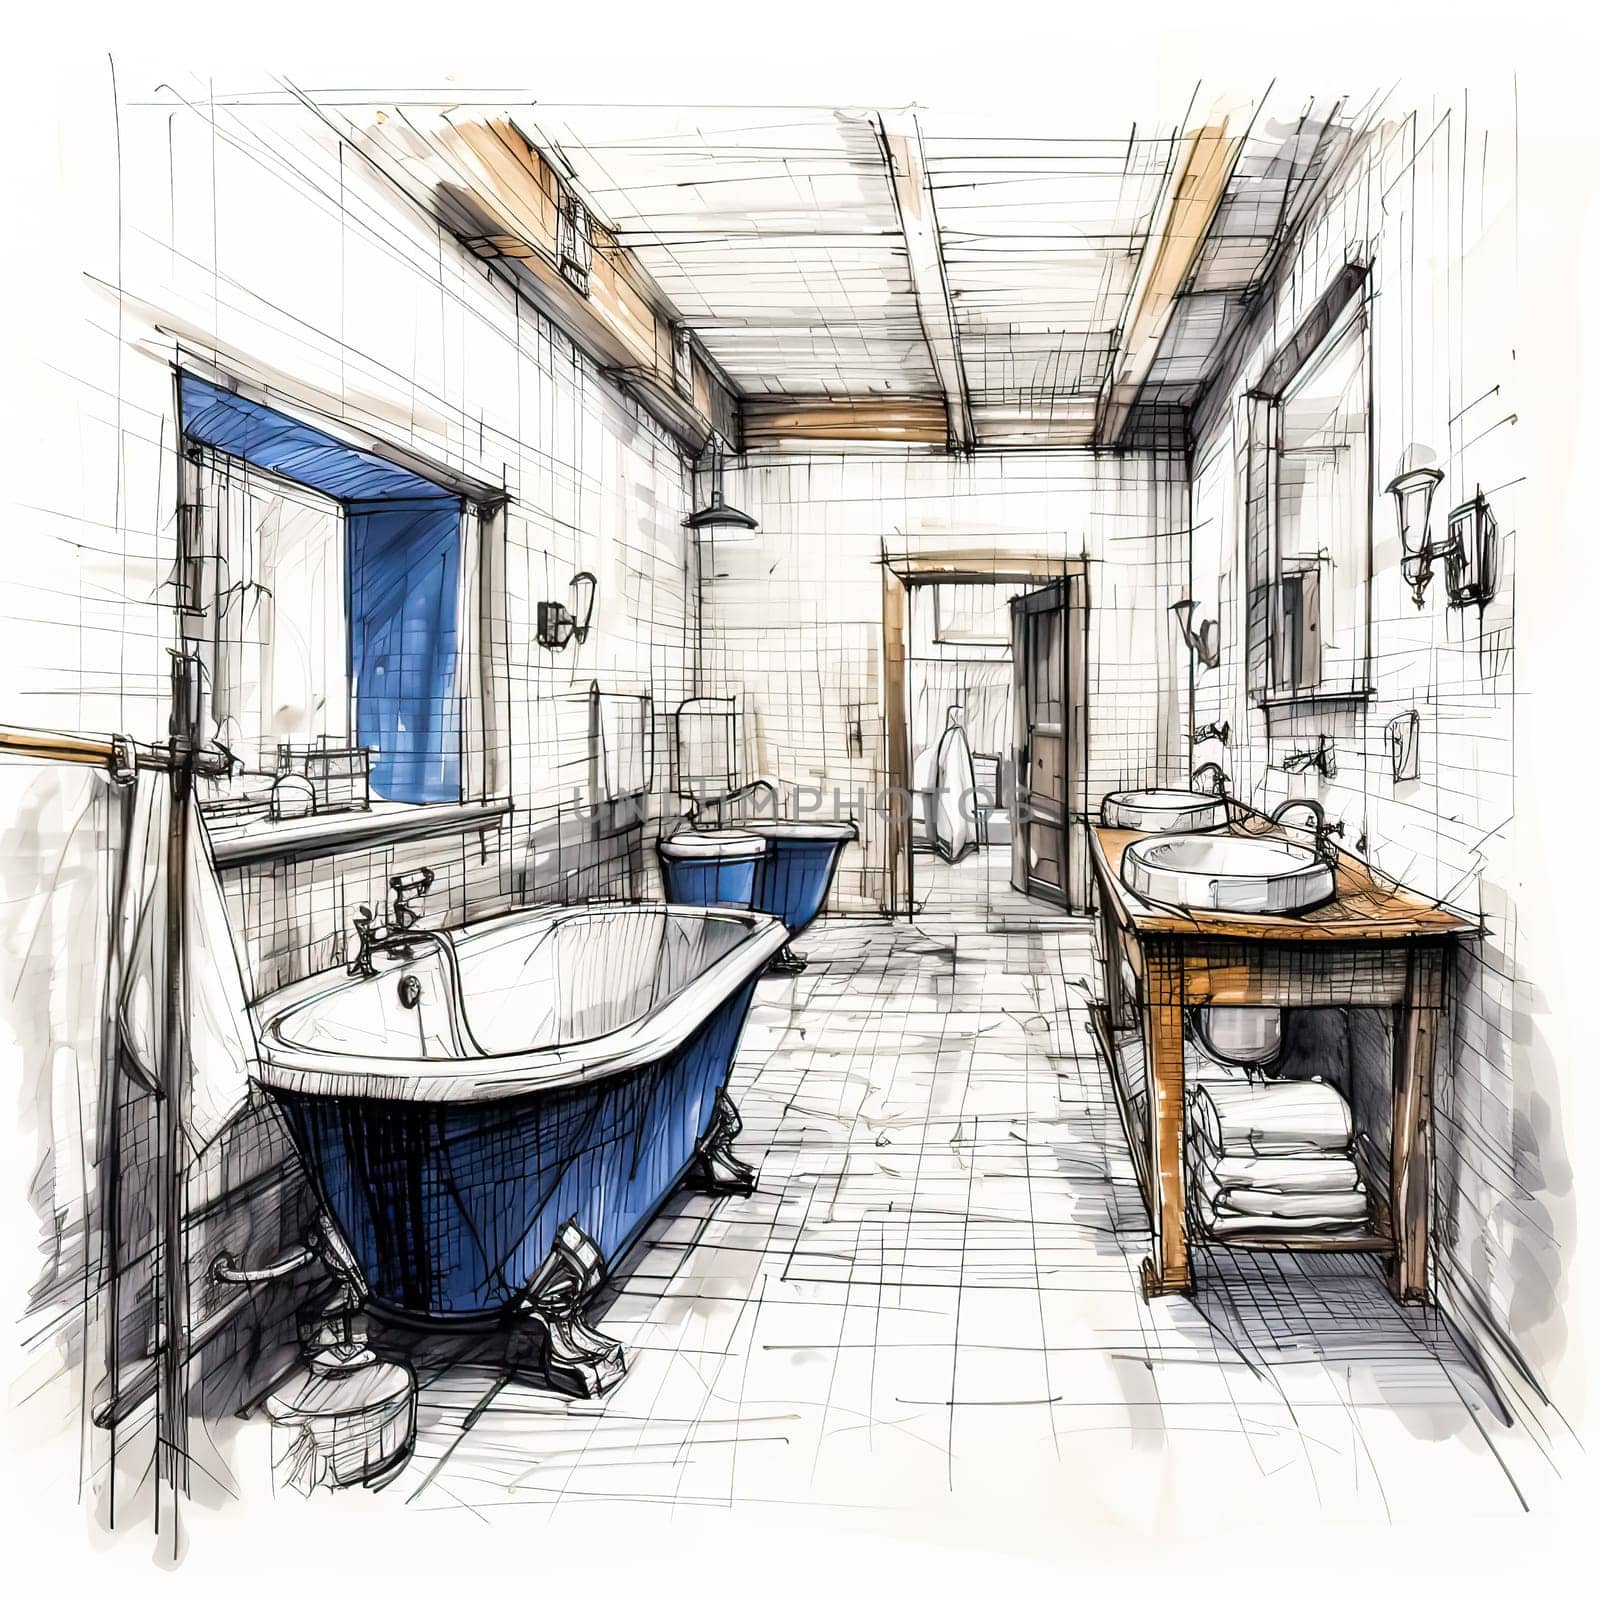 Bathroom Elegance, Watercolor sketch of a modern bath space, blending art and interior design seamlessly